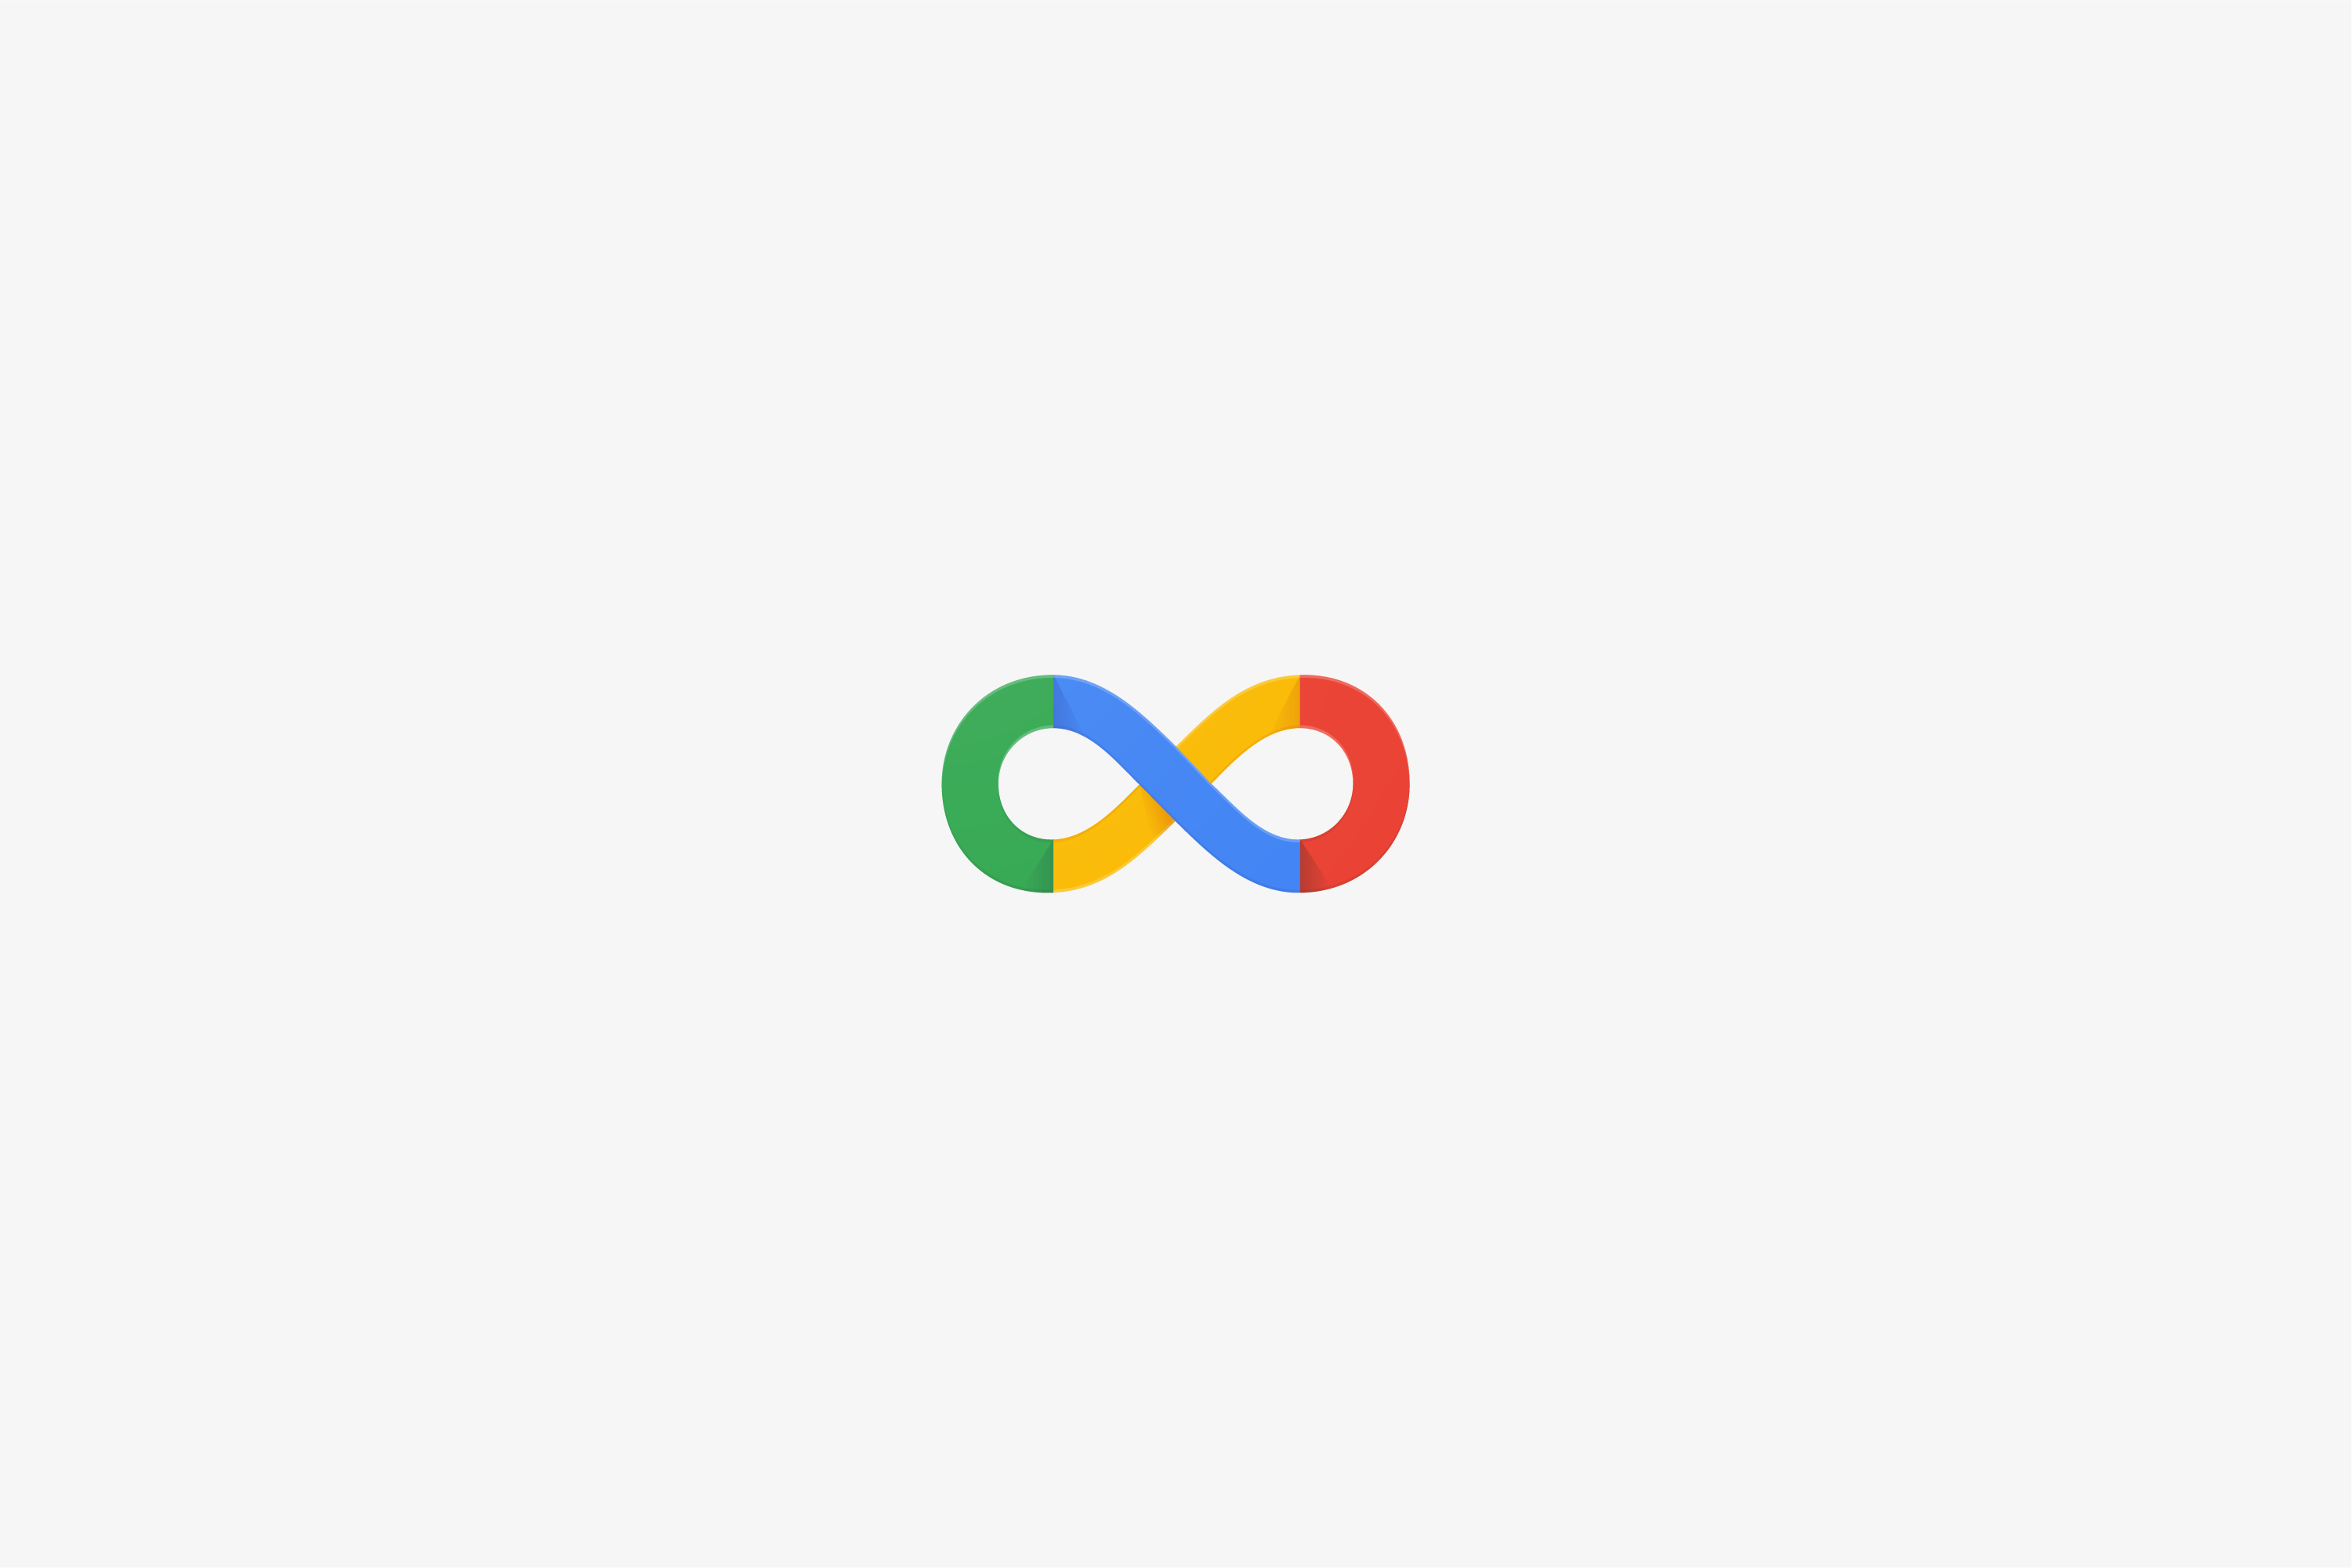 Google Design Logo - Google Digital Academy - Brand Identity Design | Jack Morgan